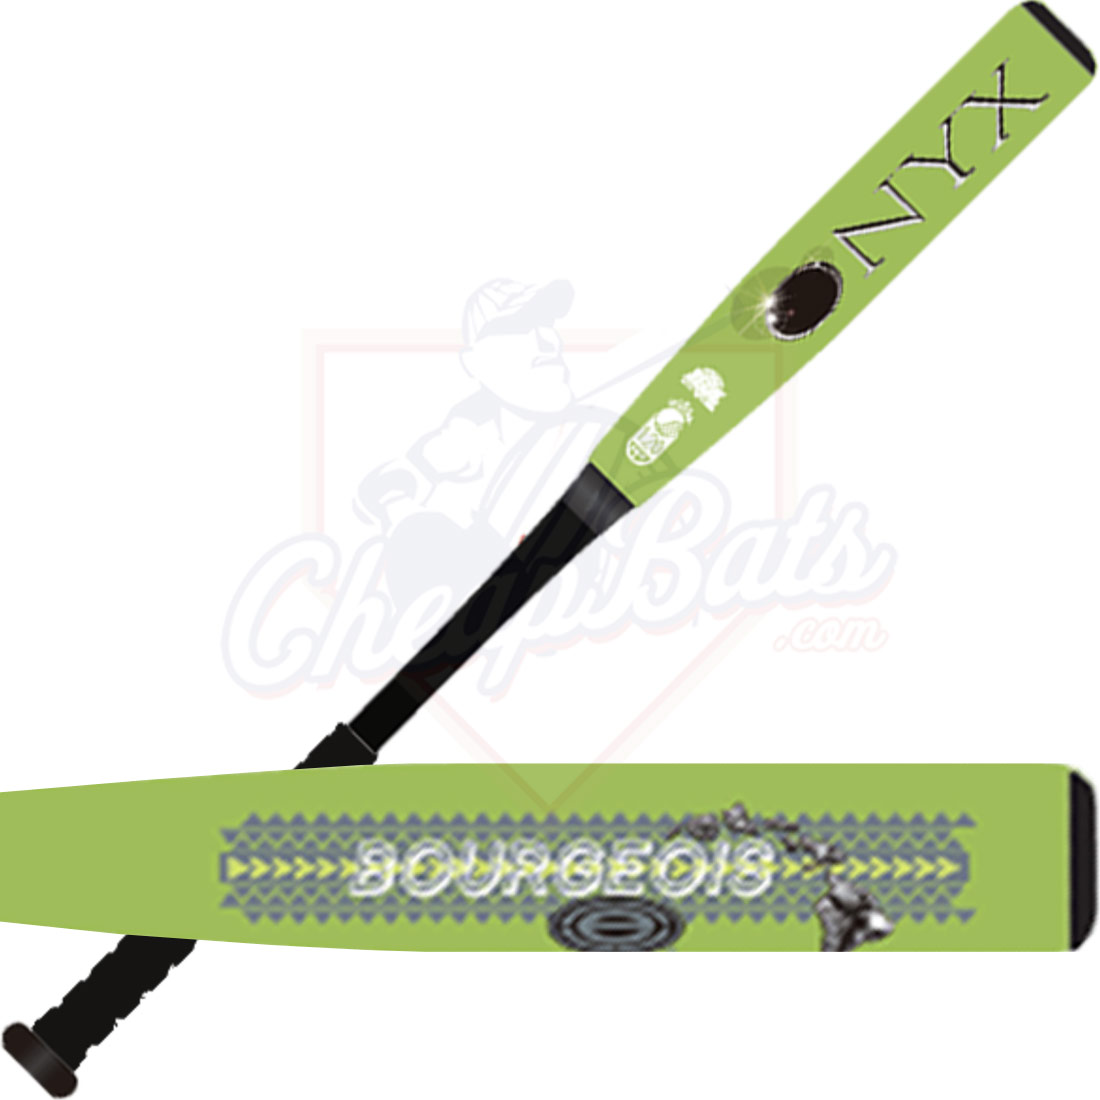 2021 Onyx Bourgeois Slowpitch Softball Bat End Loaded USSSA